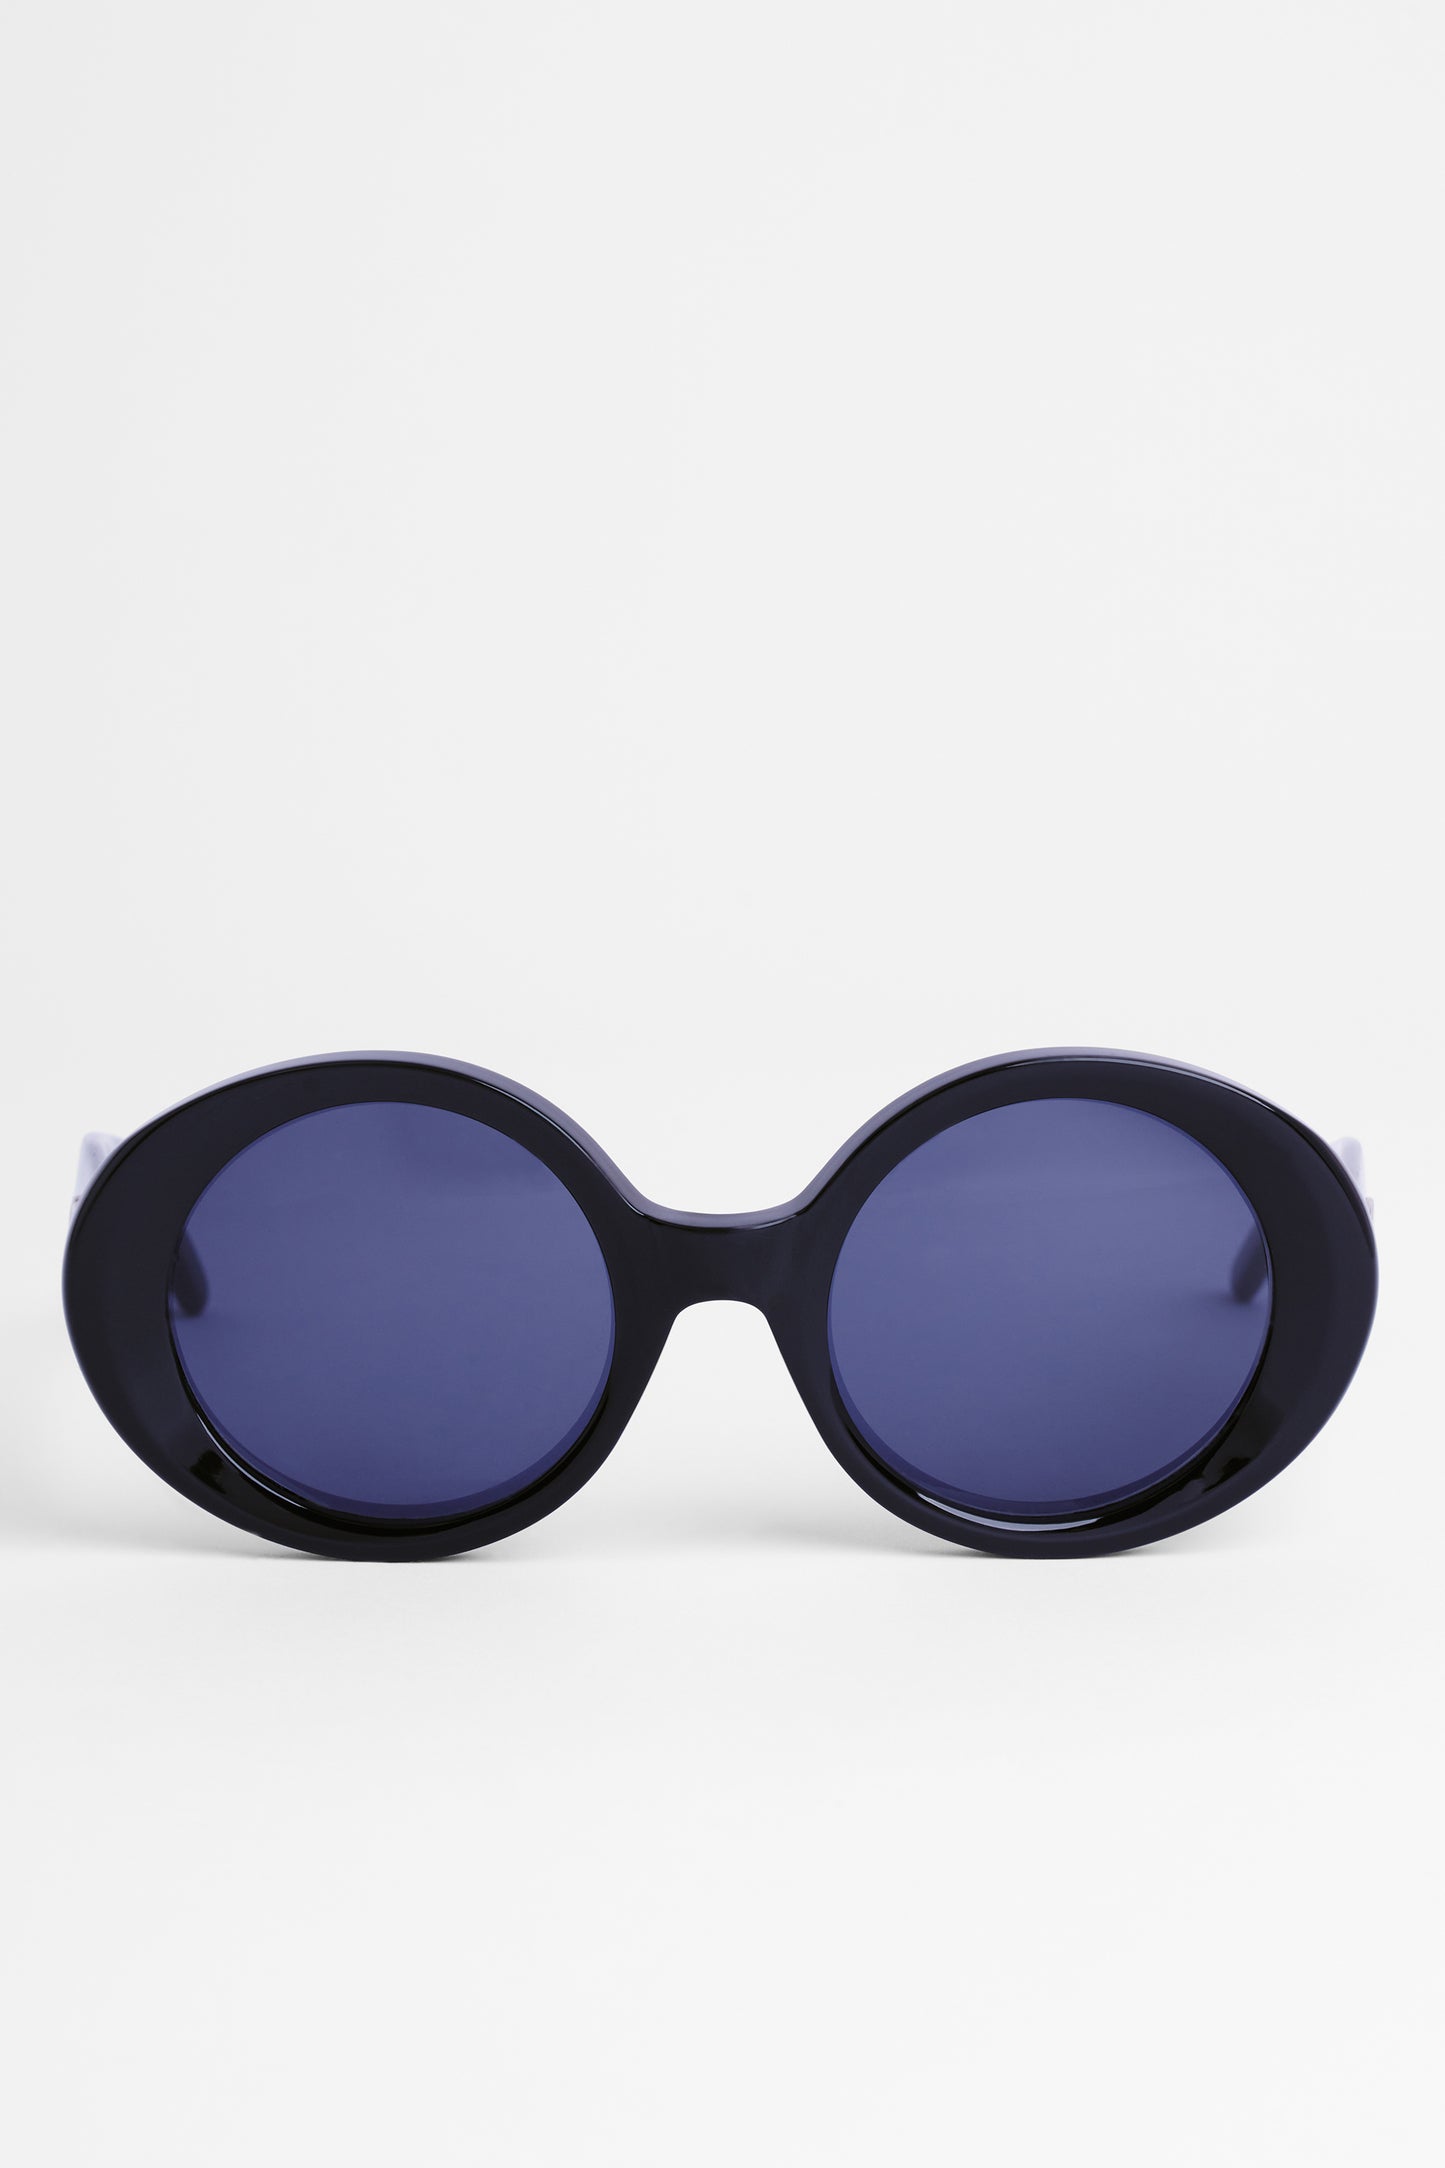 Vintage 1990’s Black Round Sunglasses